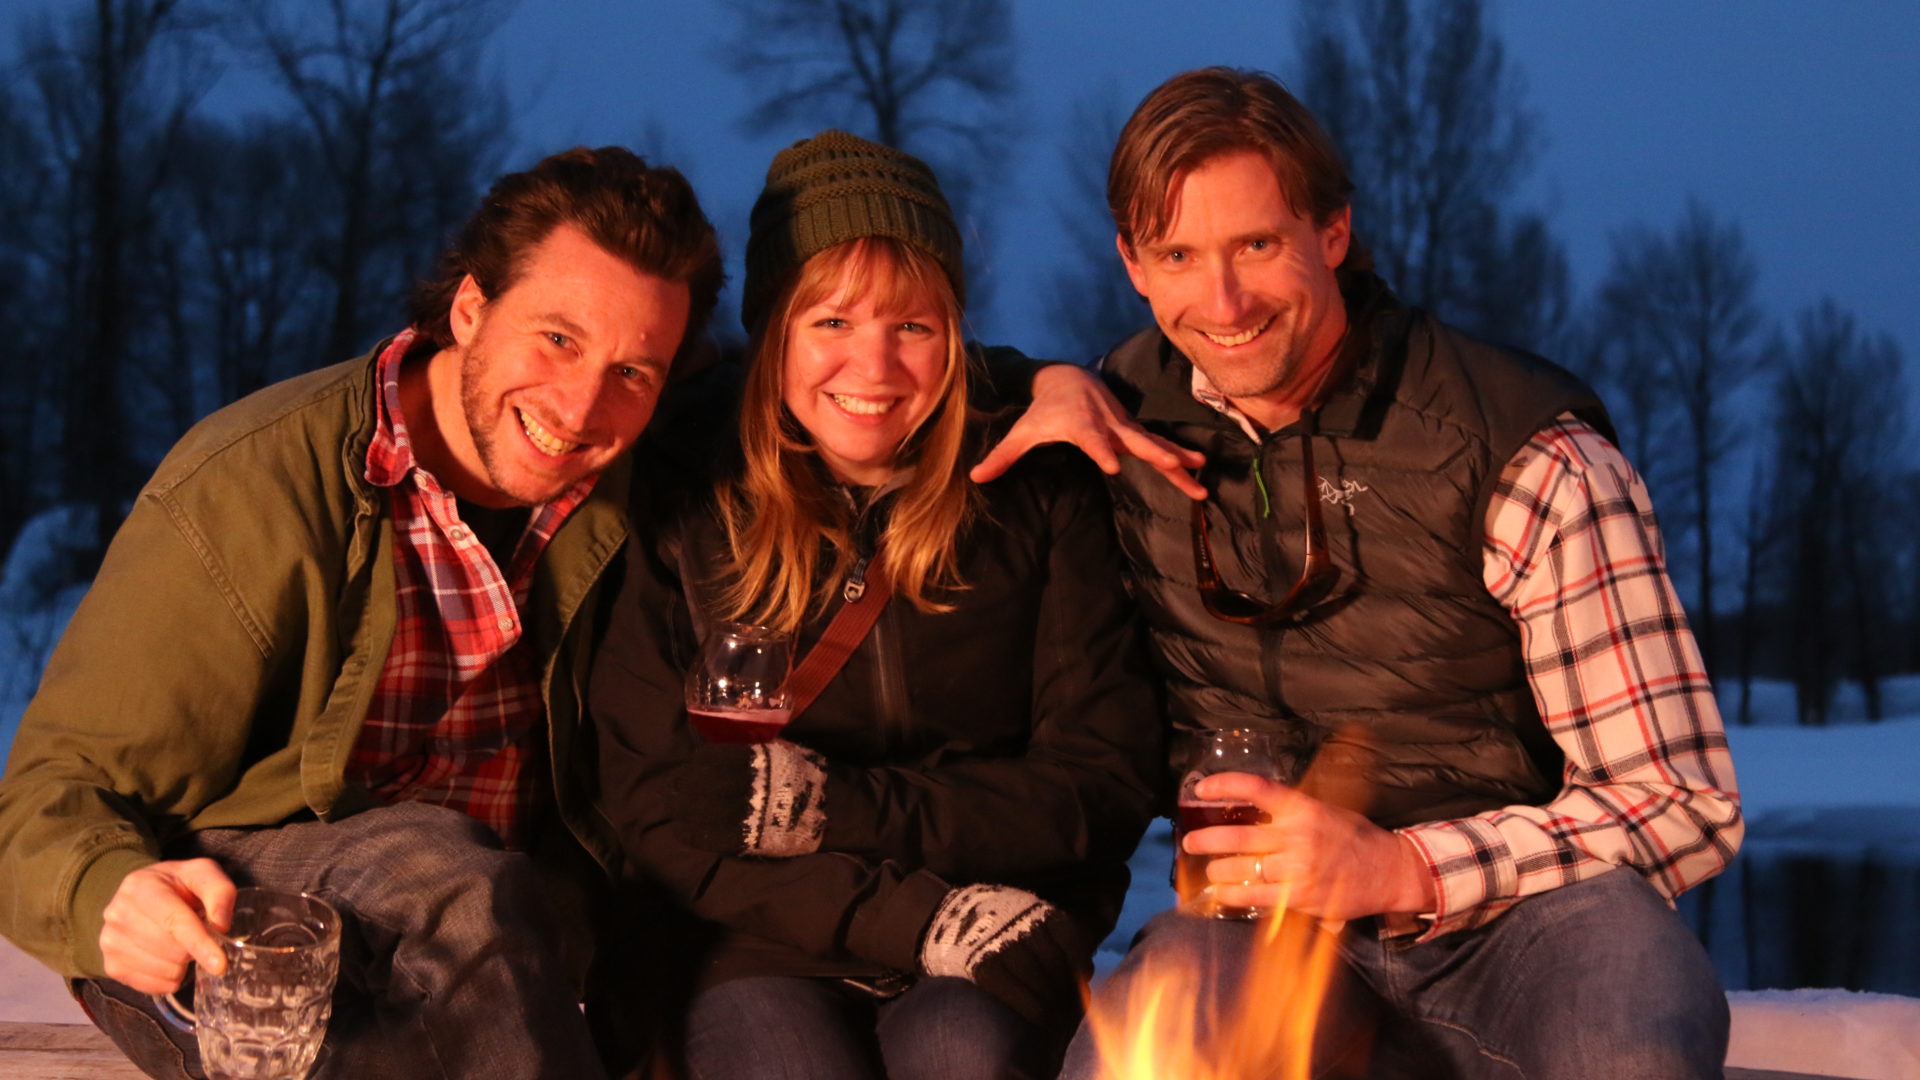 Three people sitting around a fire at night.